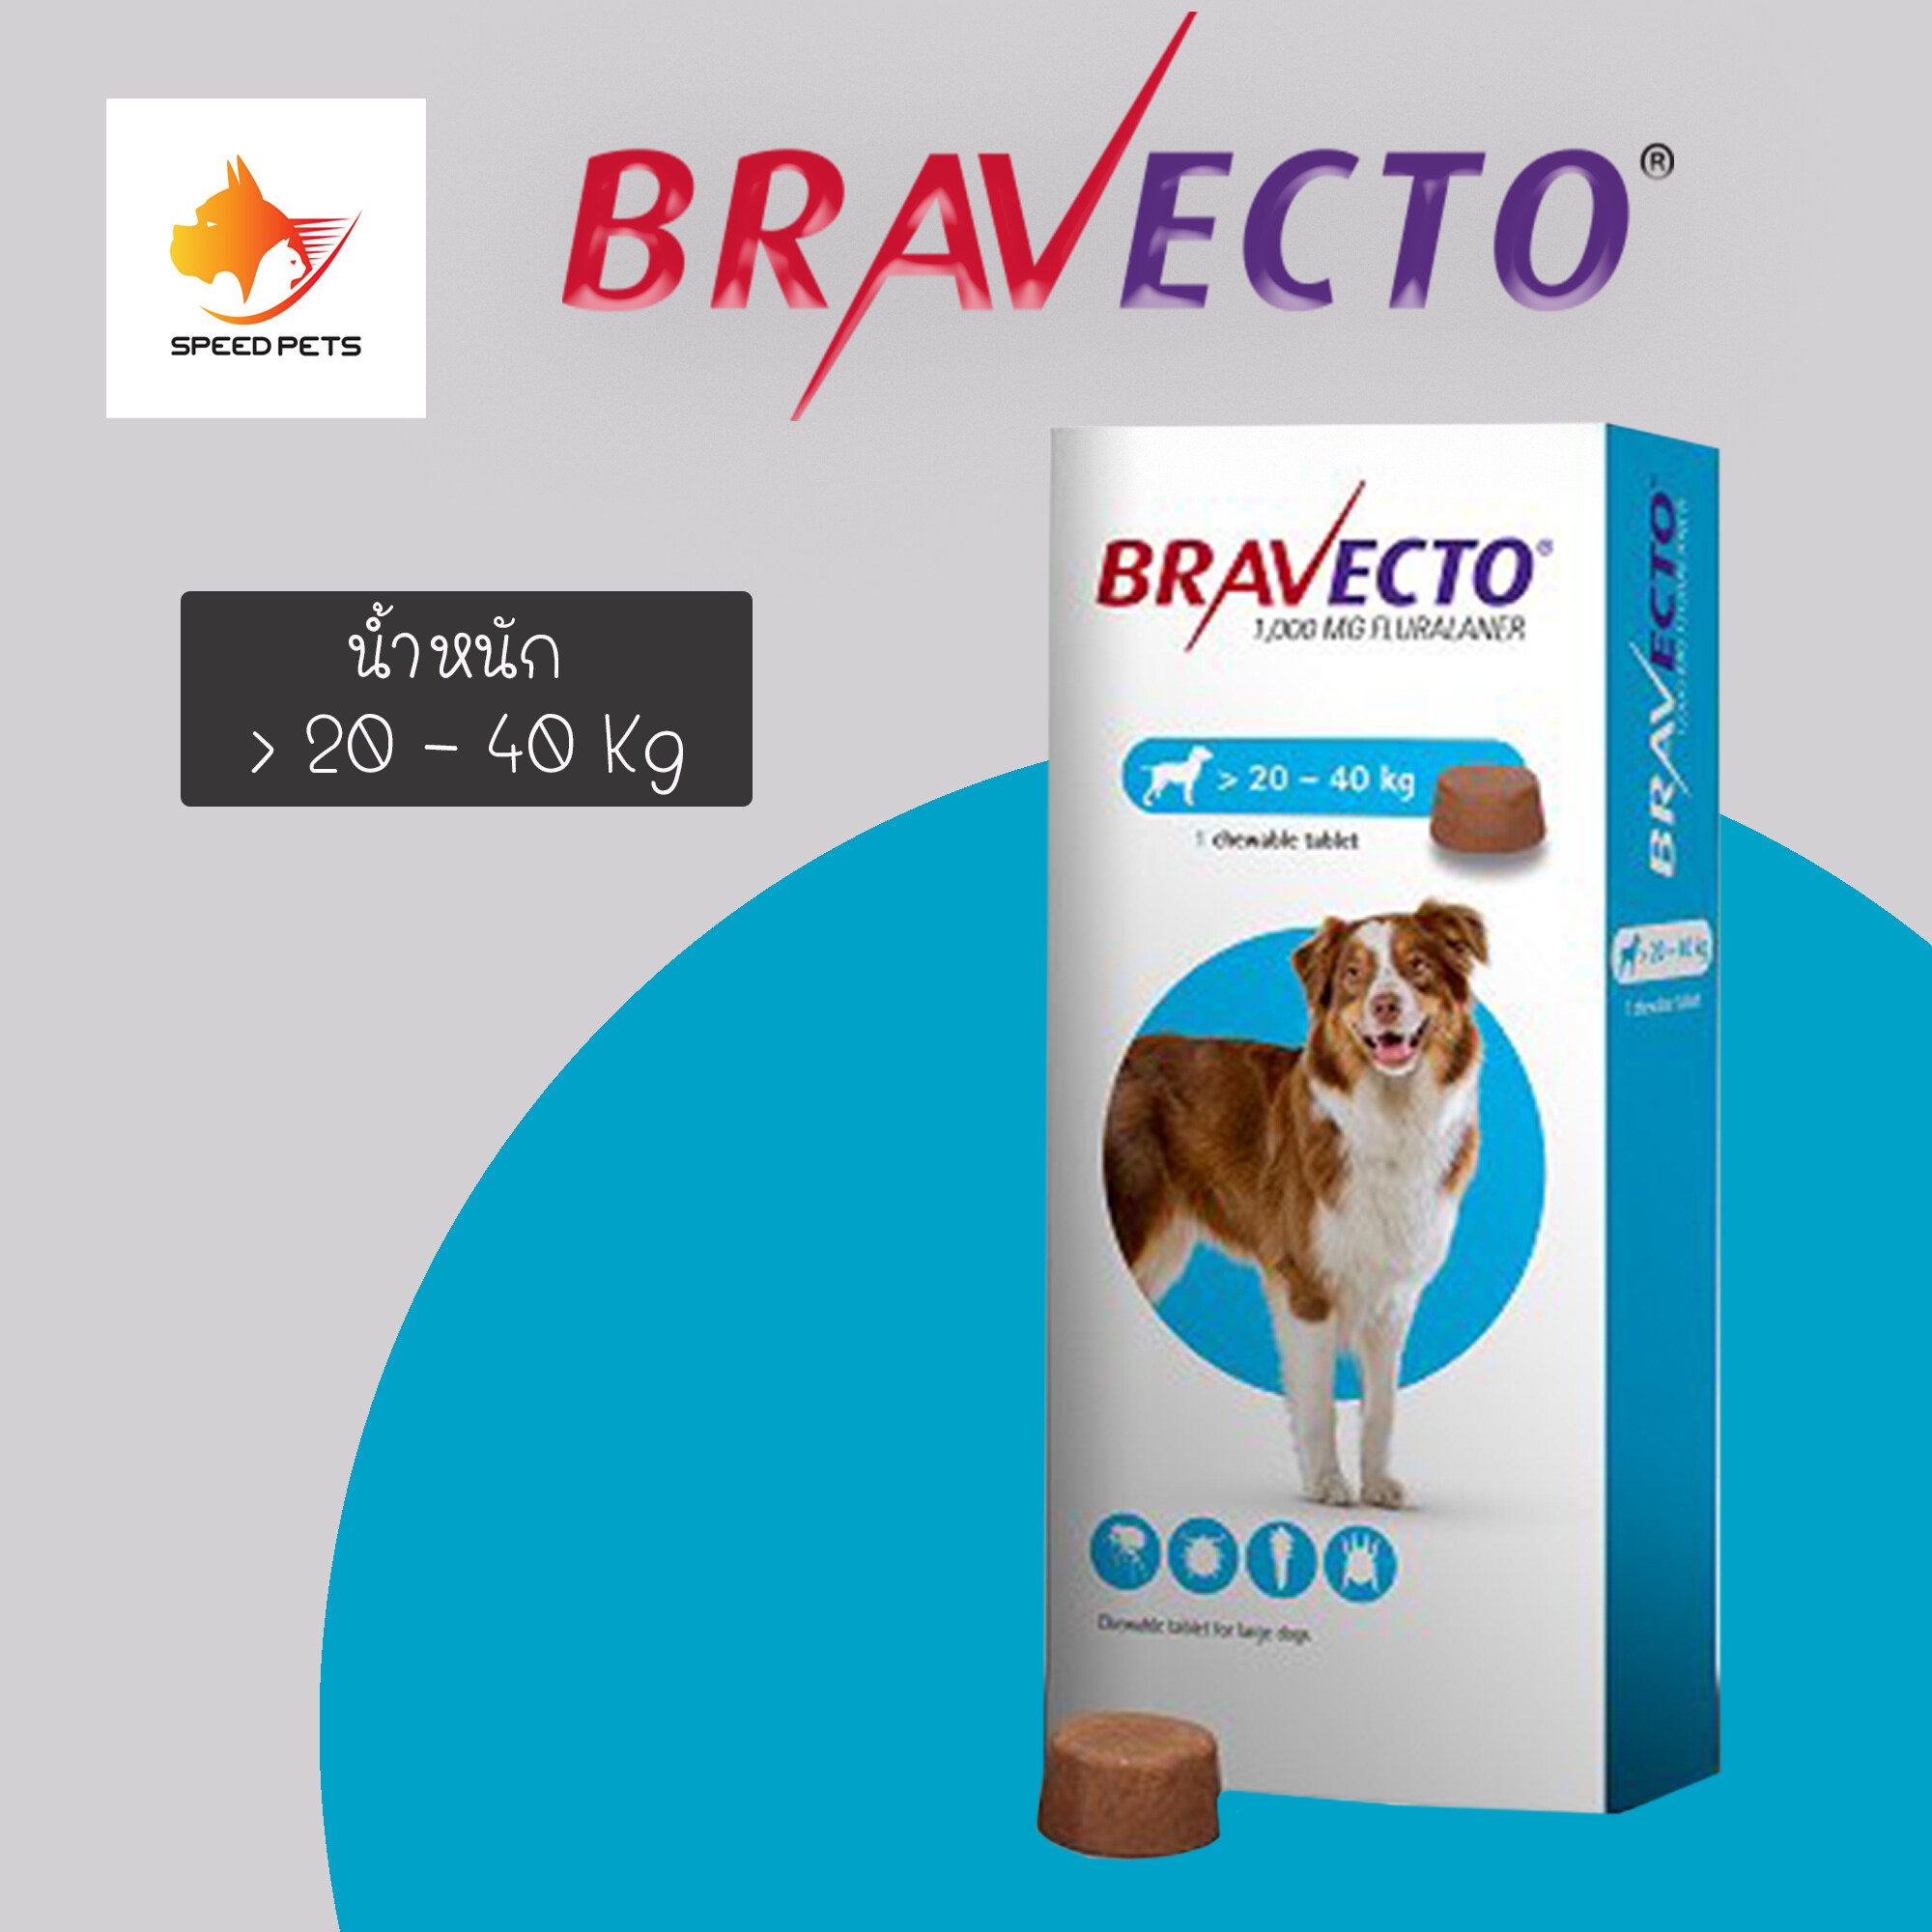 Bravectoบาเวคโต สุนัข dog 20 - 40 kg x 1 กล่อง